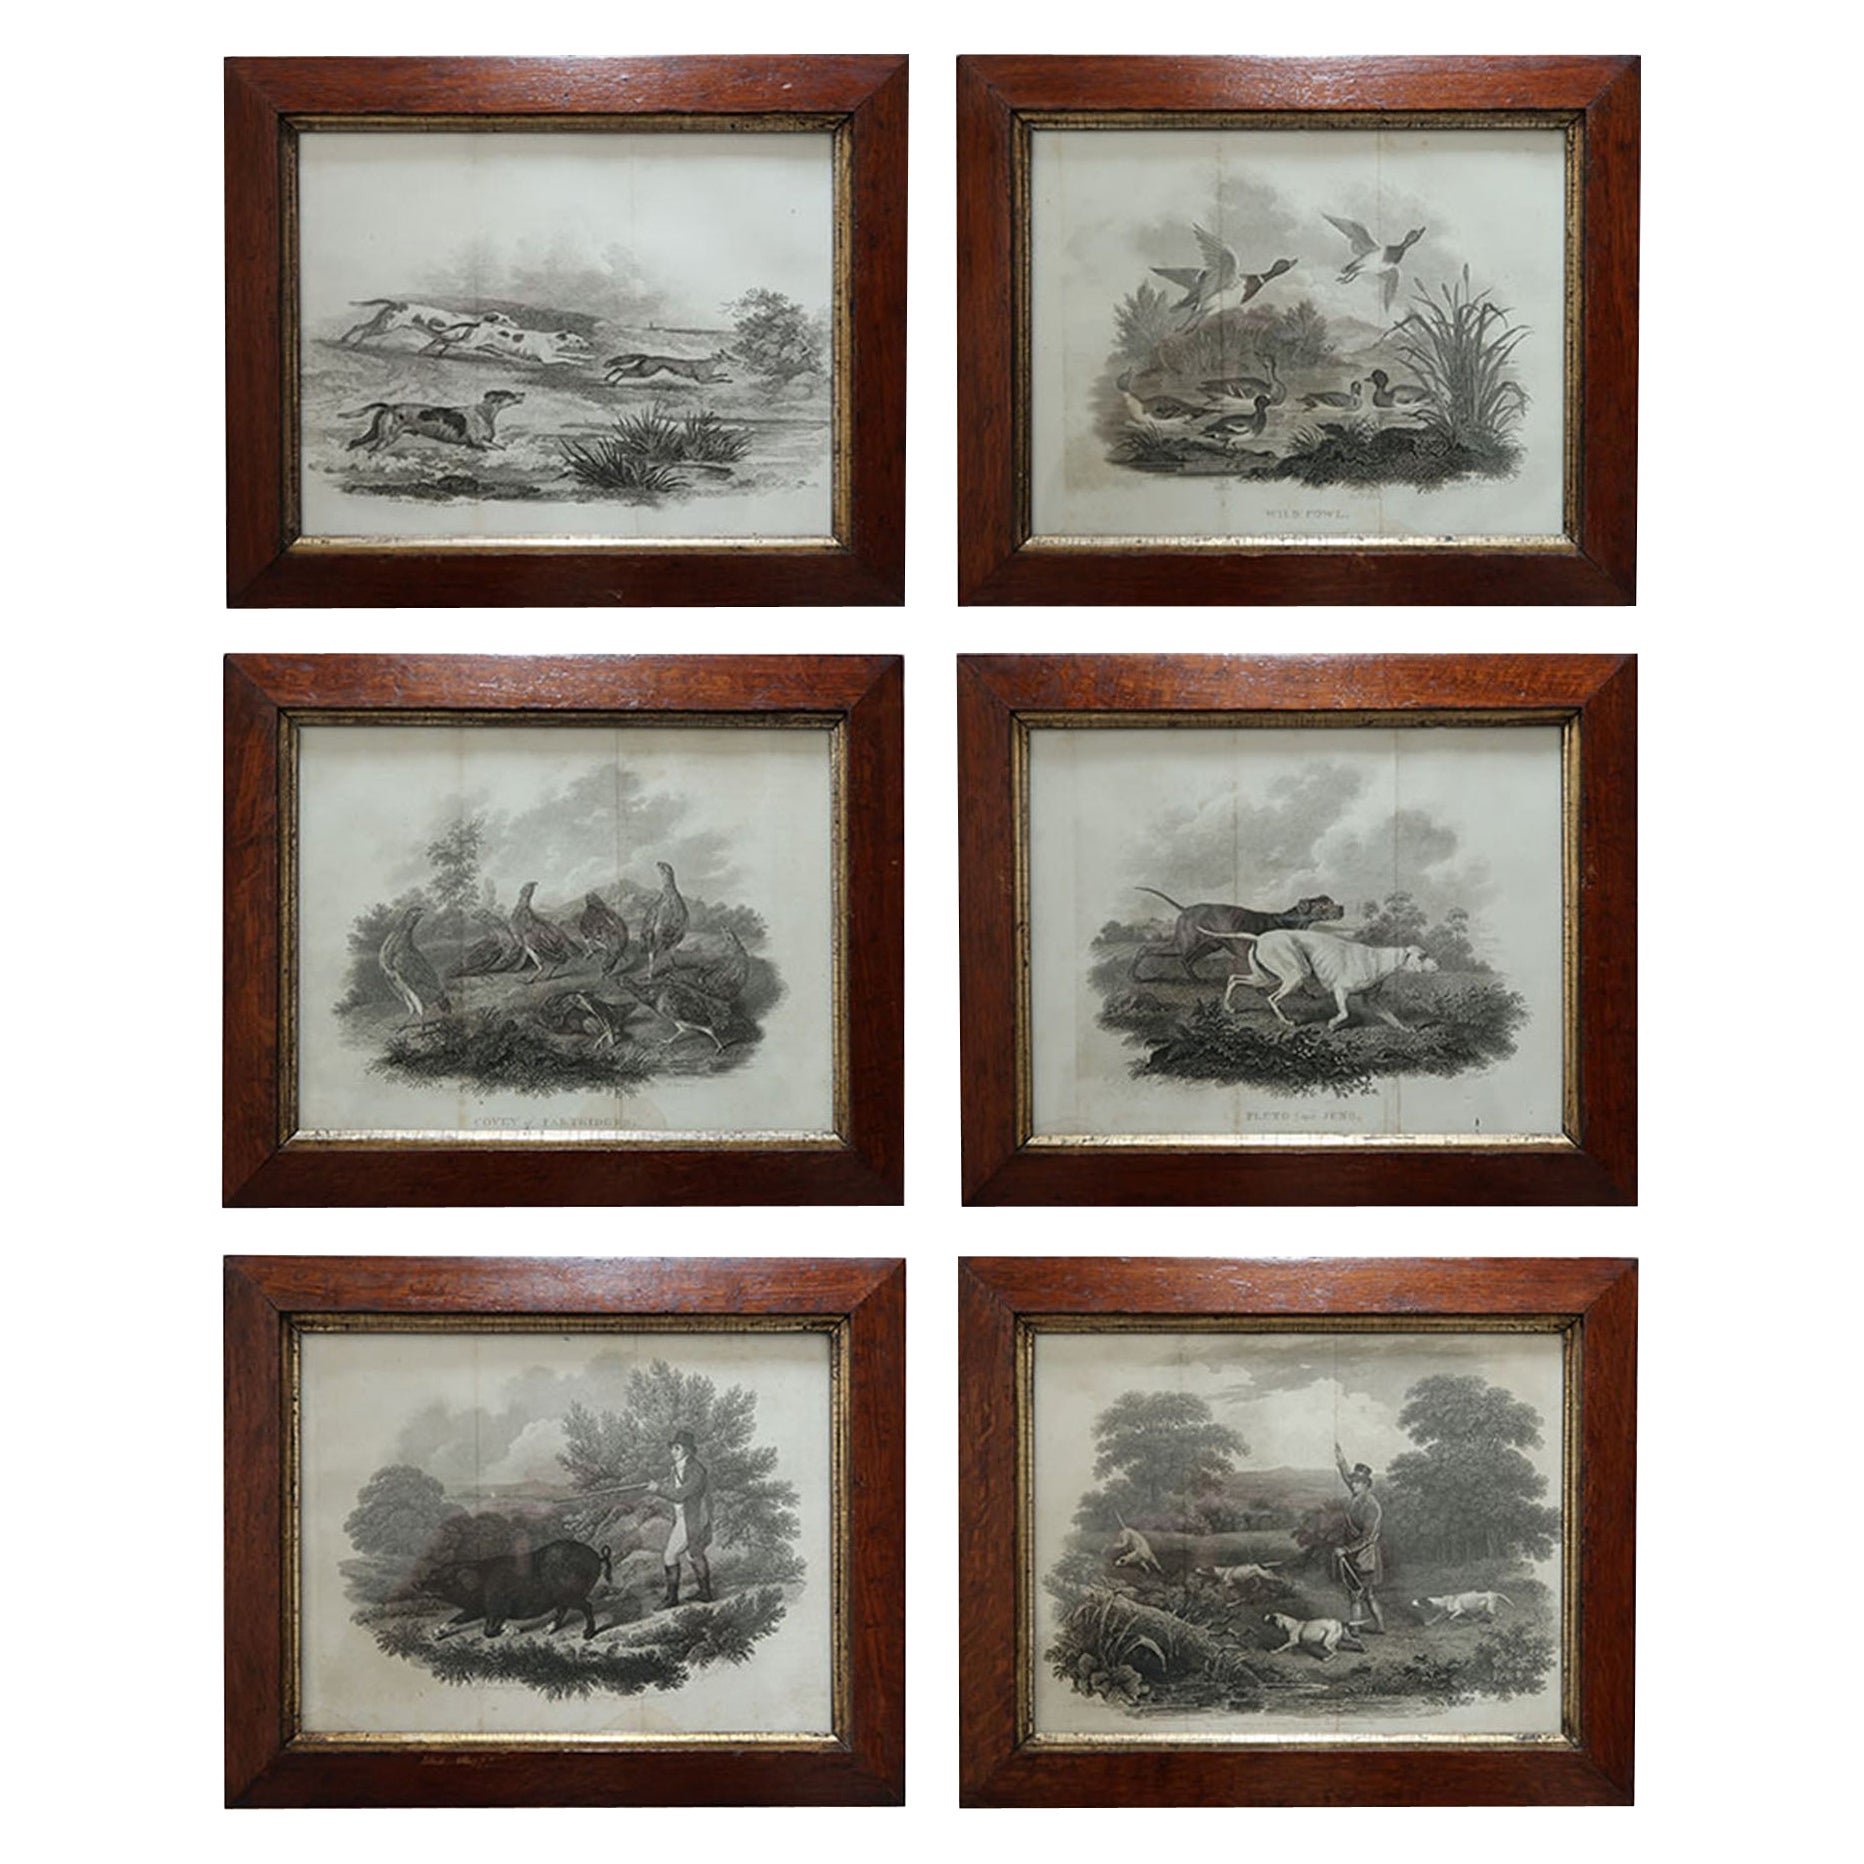 Set of 6 Original Antique Sporting Prints in Pollard Oak Frames, C.1810